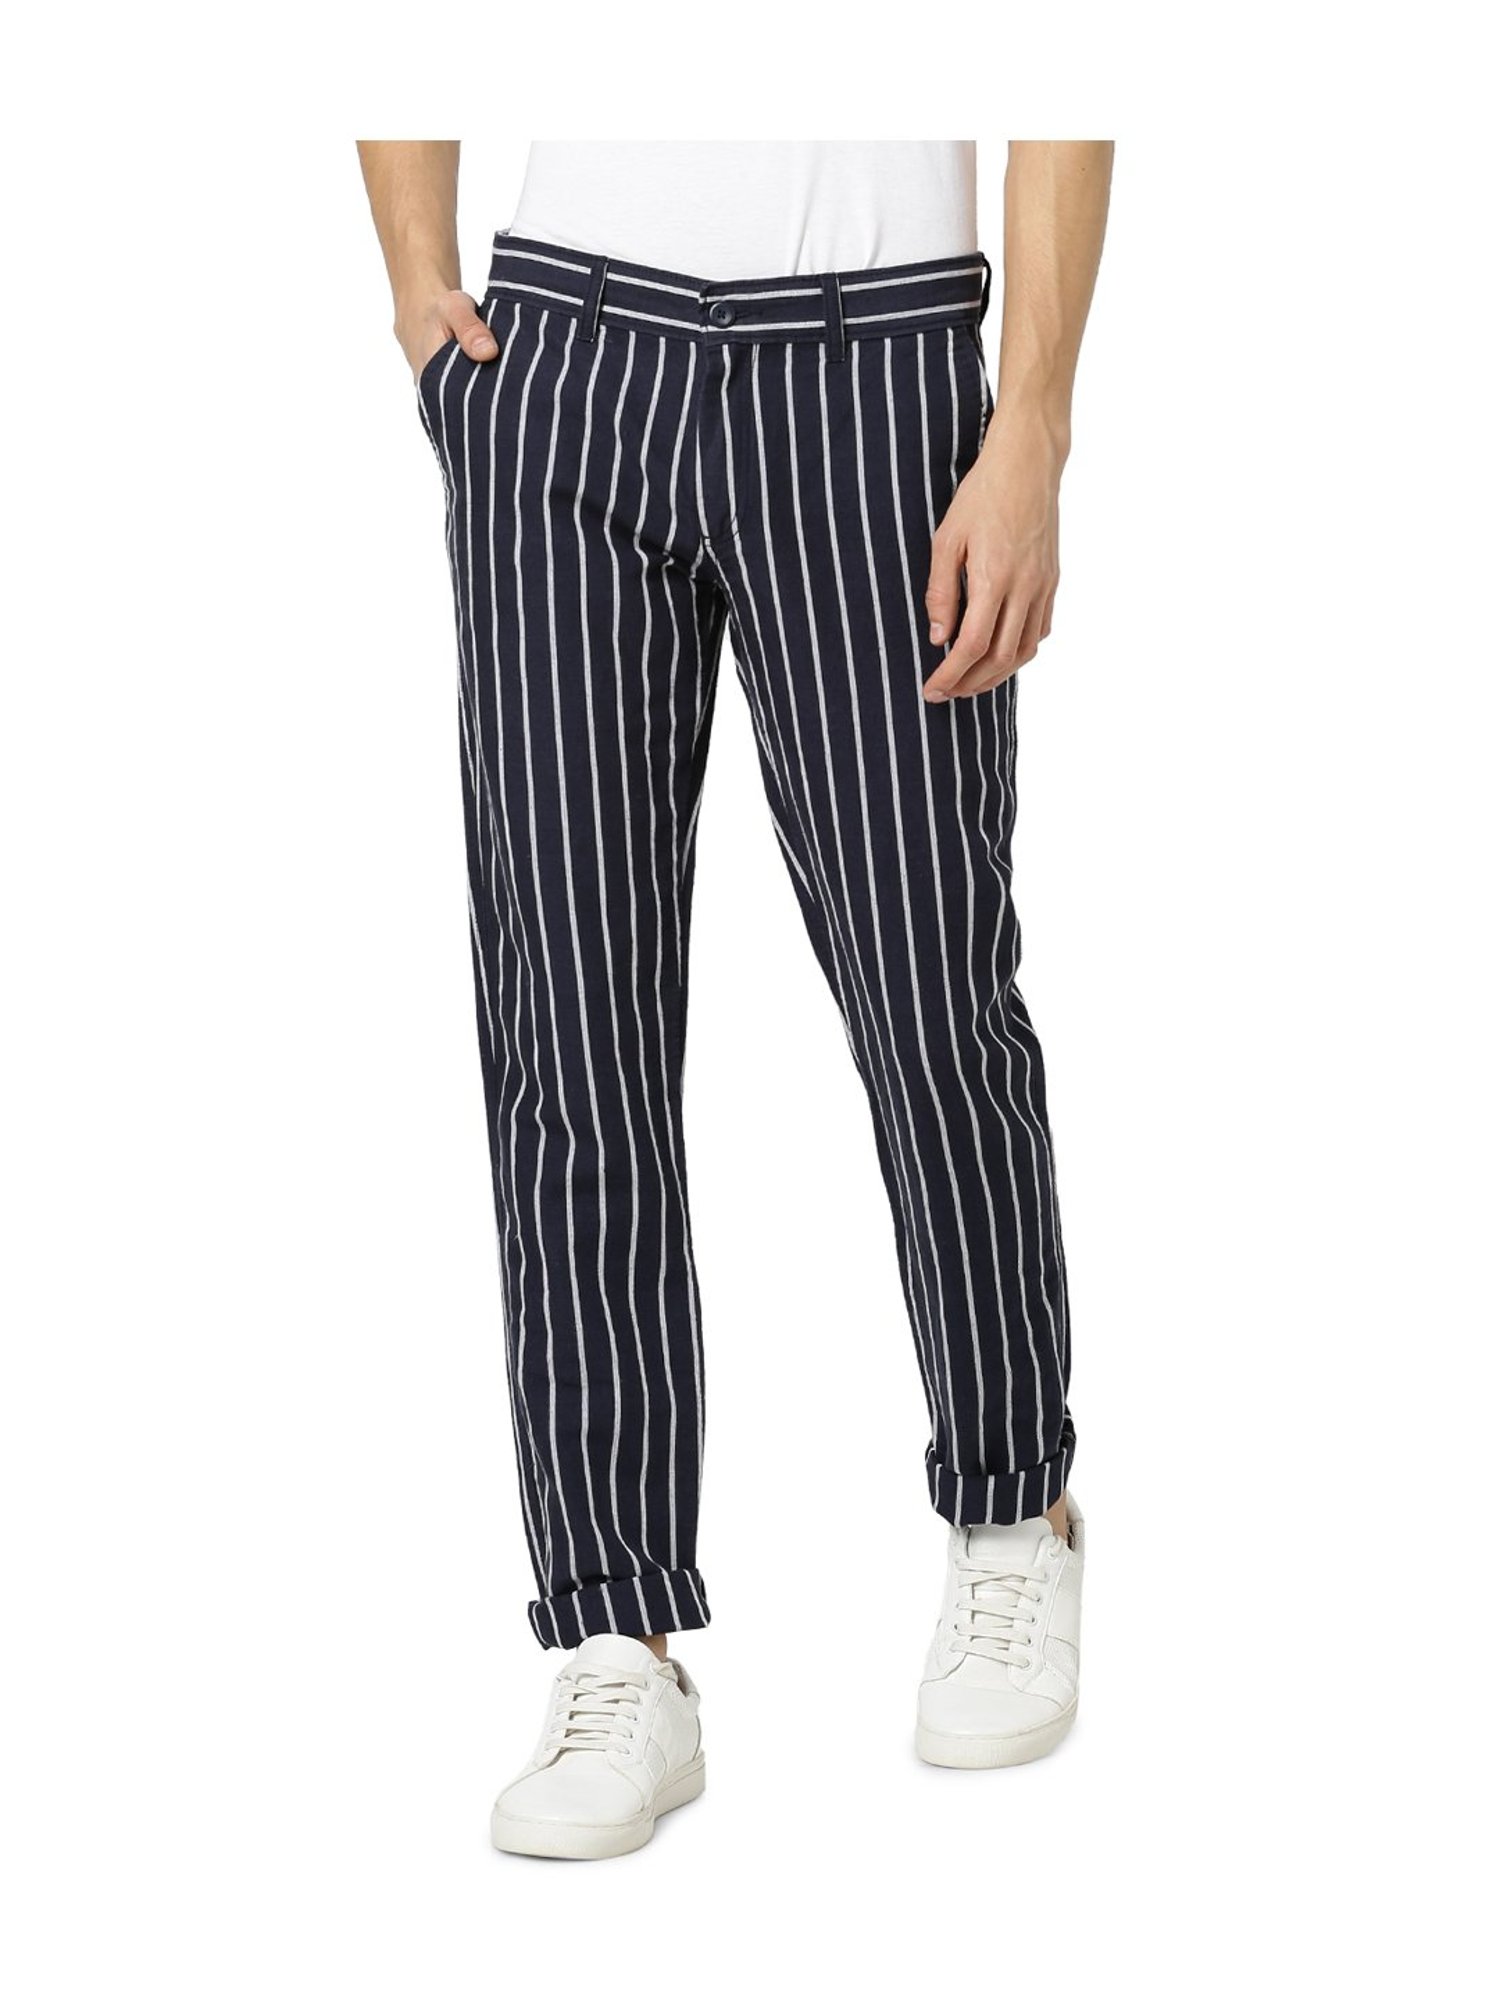 Buy Mens White Striped Casual Pants for Men Online at Bewakoof